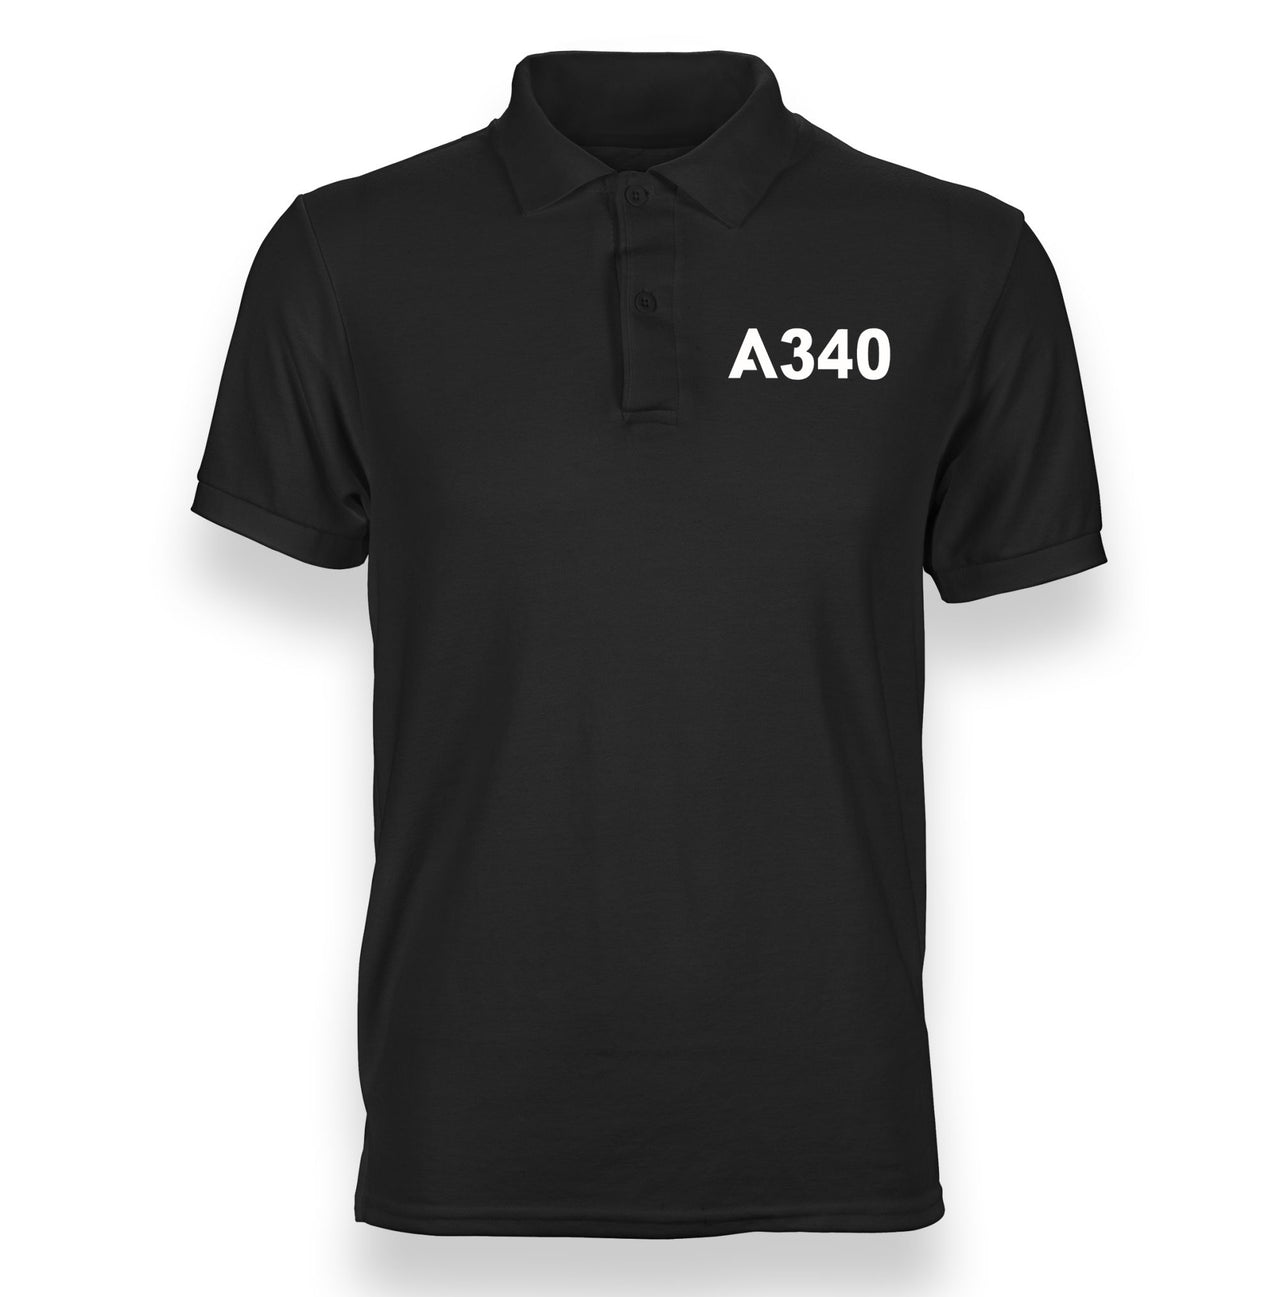 A340 Flat Text Designed "WOMEN" Polo T-Shirts